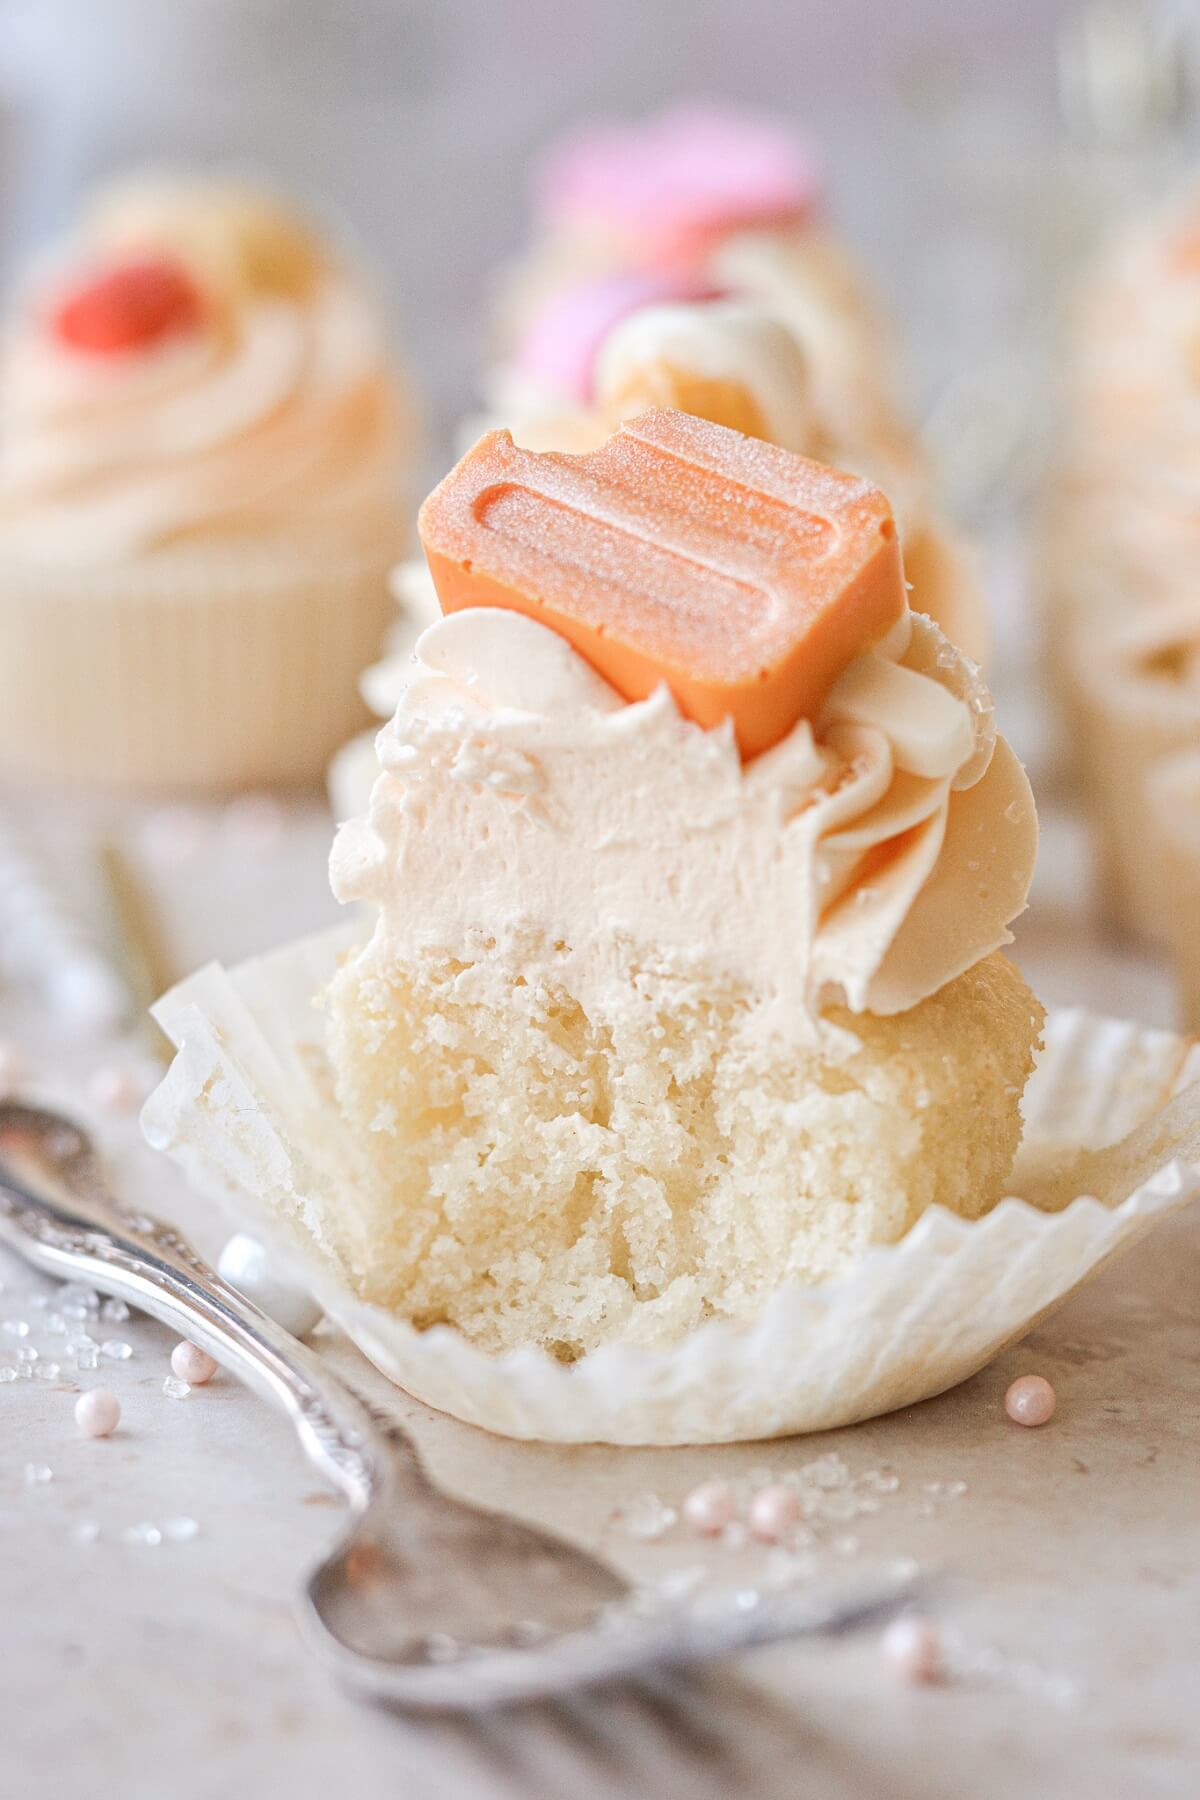 An orange creamsicle cupcake with a bite taken.